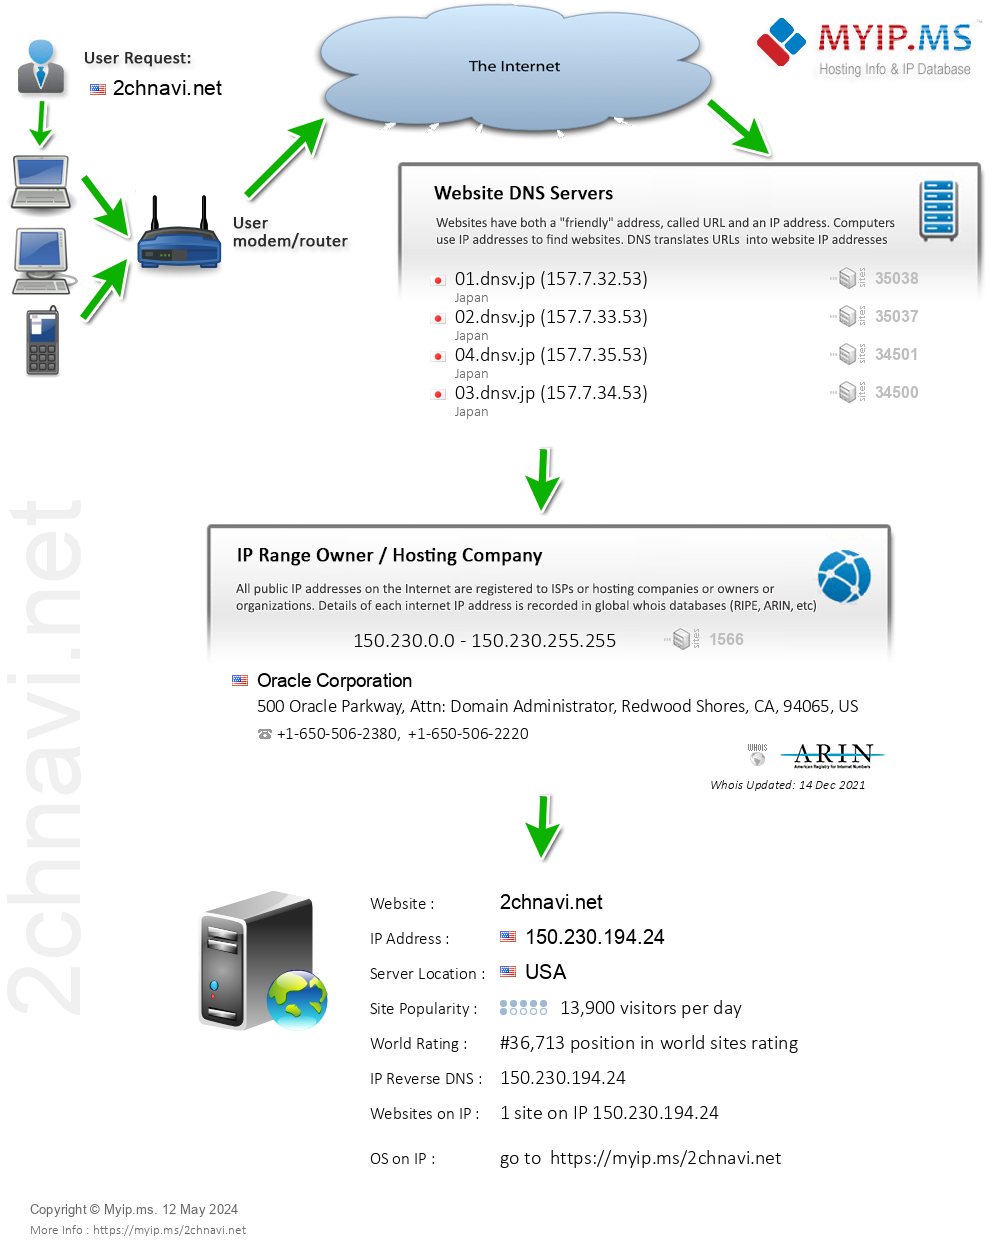 2chnavi.net - Website Hosting Visual IP Diagram